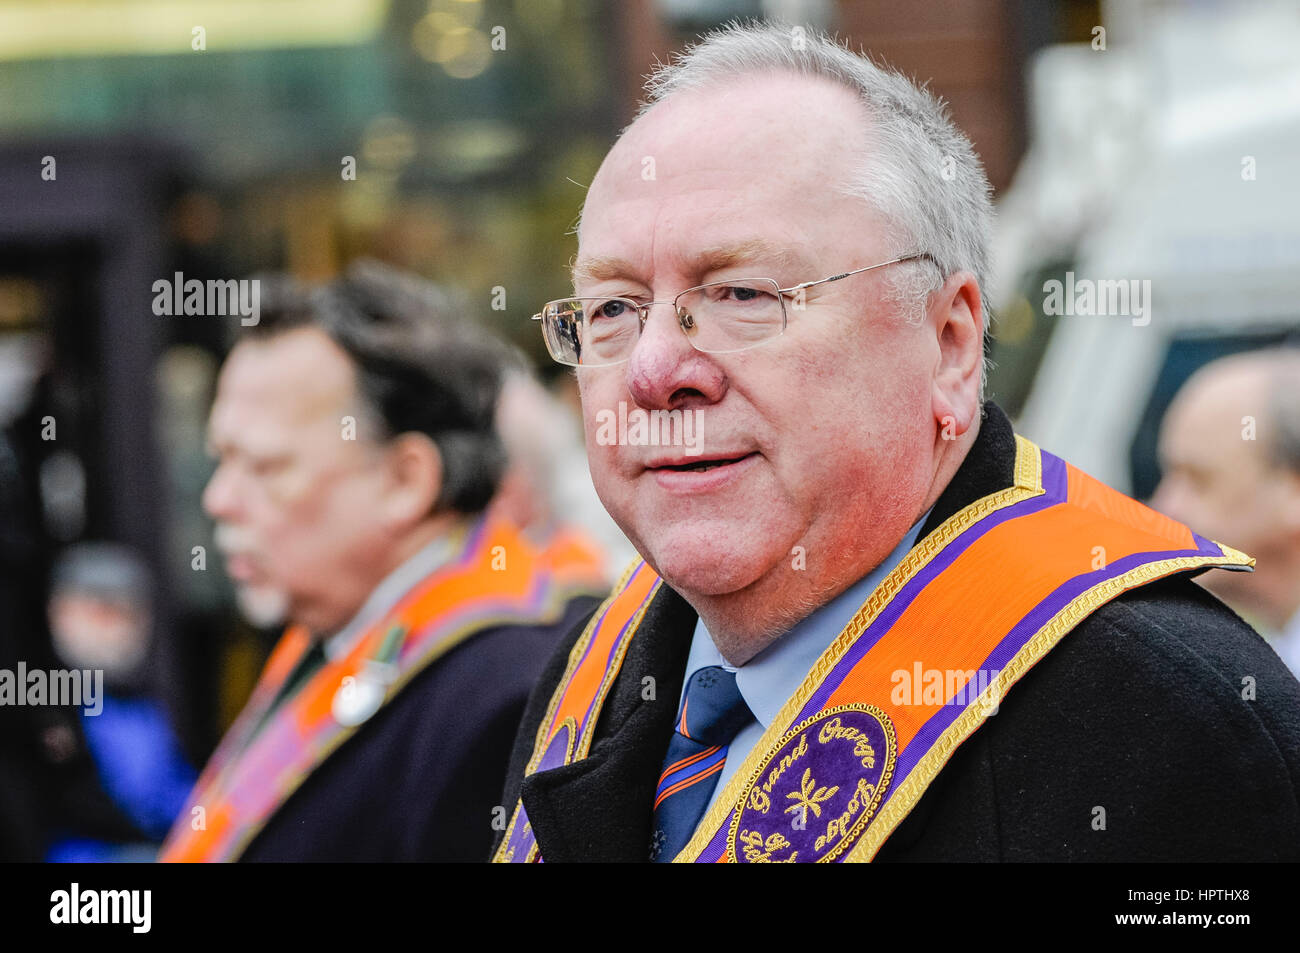 Belfast, Northern Ireland. 25 Feb 2017 - Grand Lodge Chaplain Rev. Mervyn Gibson takes part in an Orange Order parade. Stock Photo